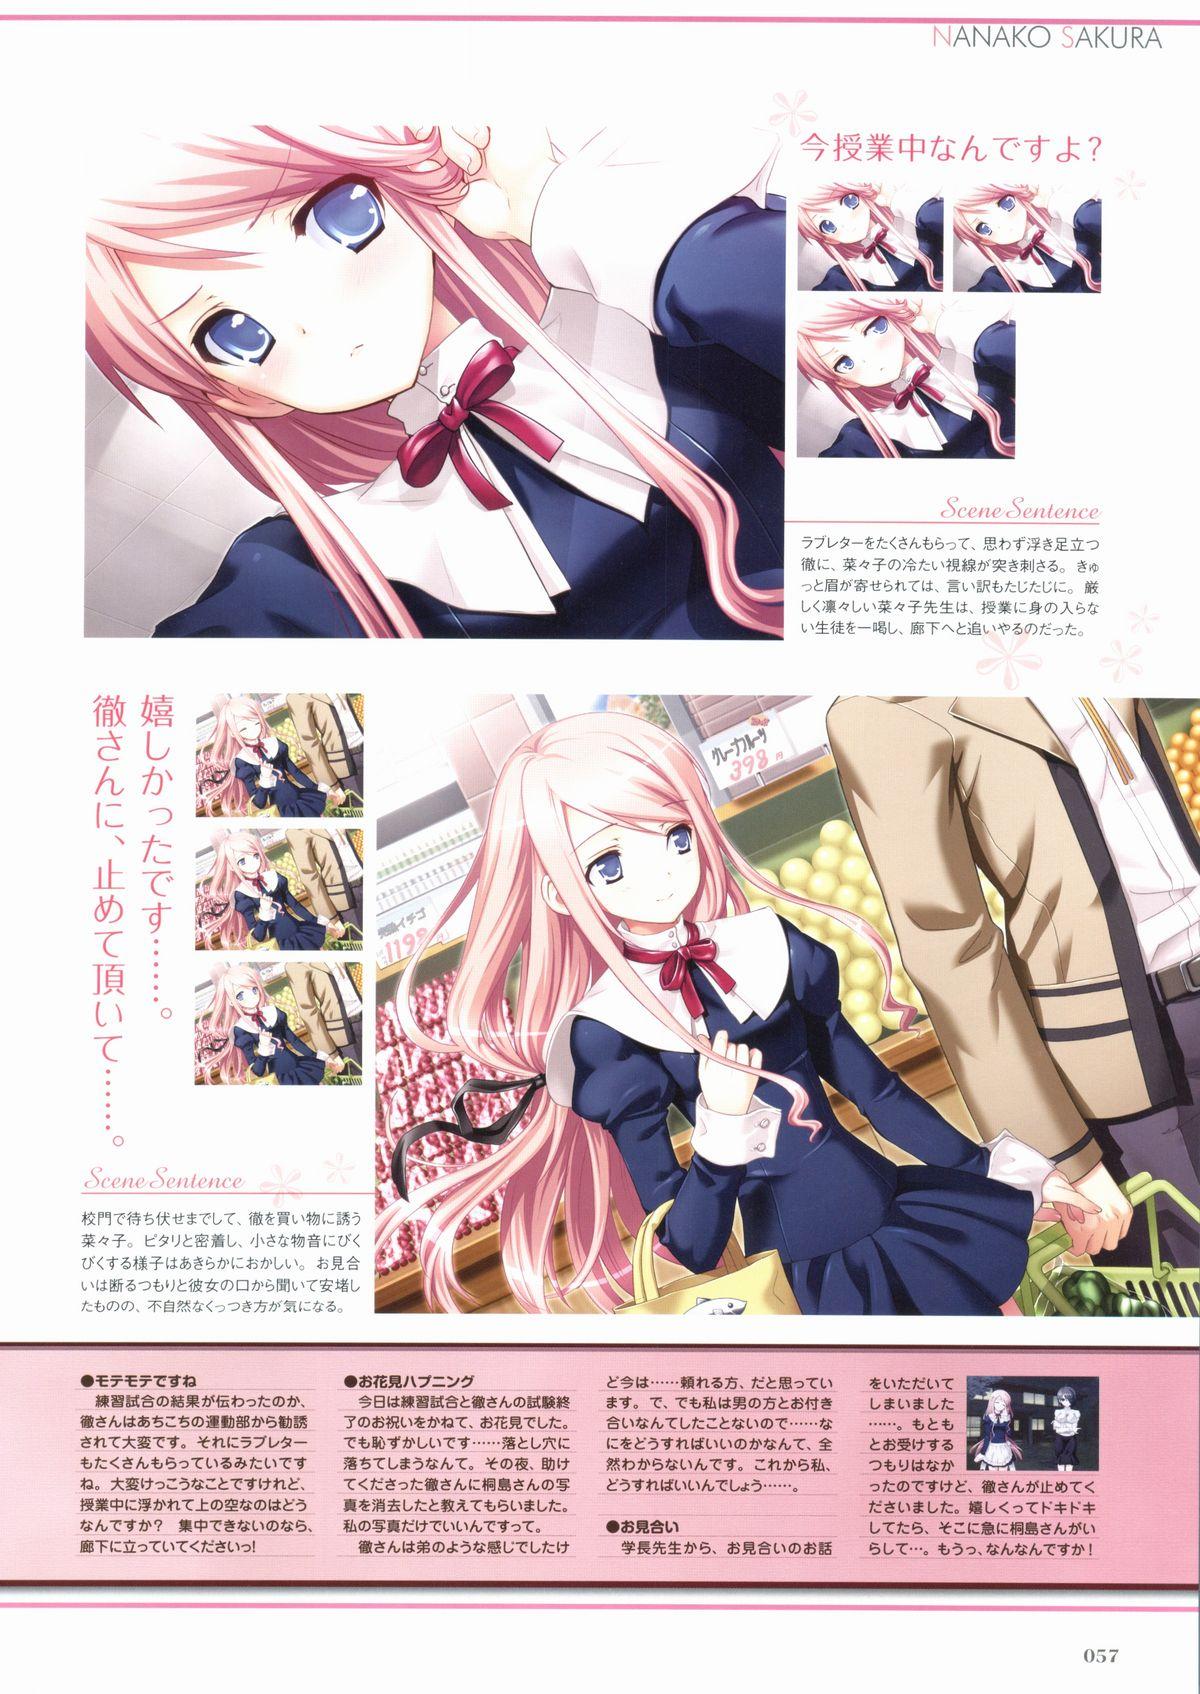 Sakura Sakura Visual Fan Book 61